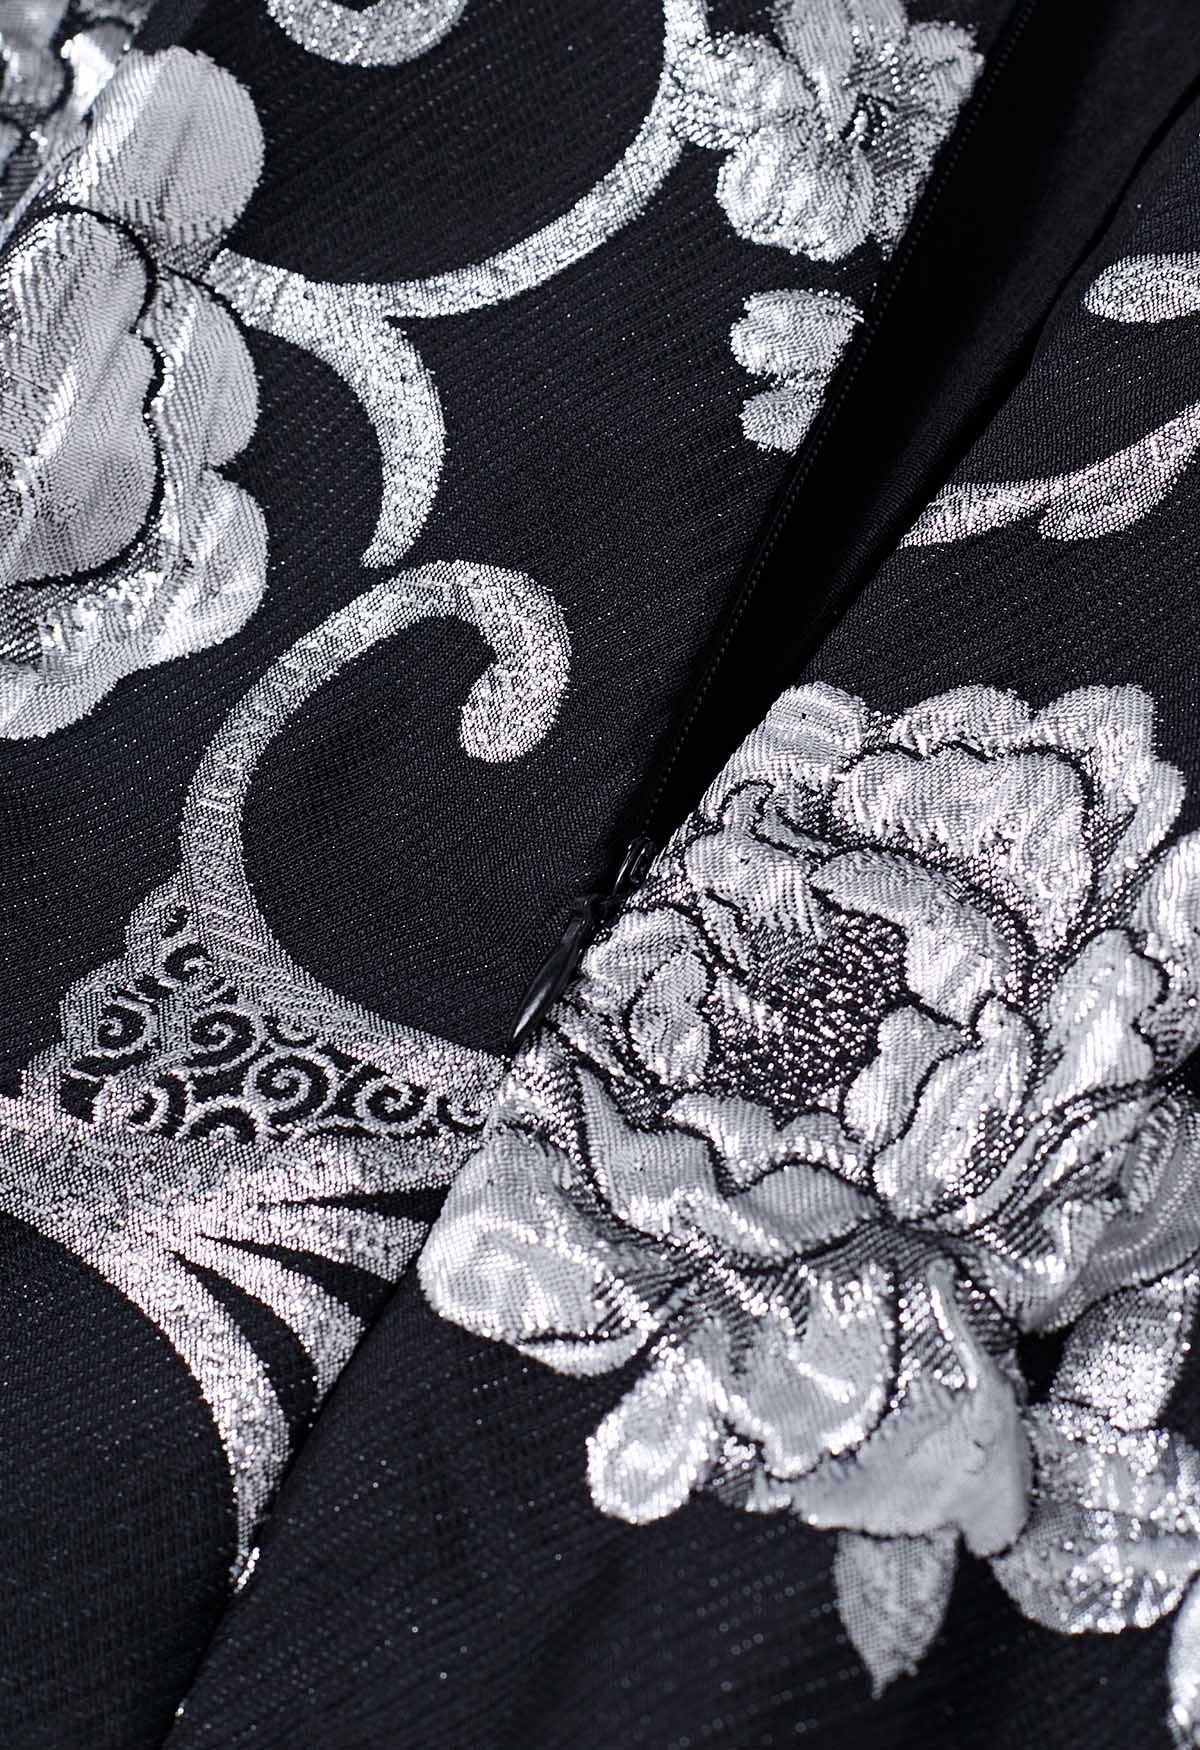 Falda midi plisada de corte A de jacquard fluorescente en negro